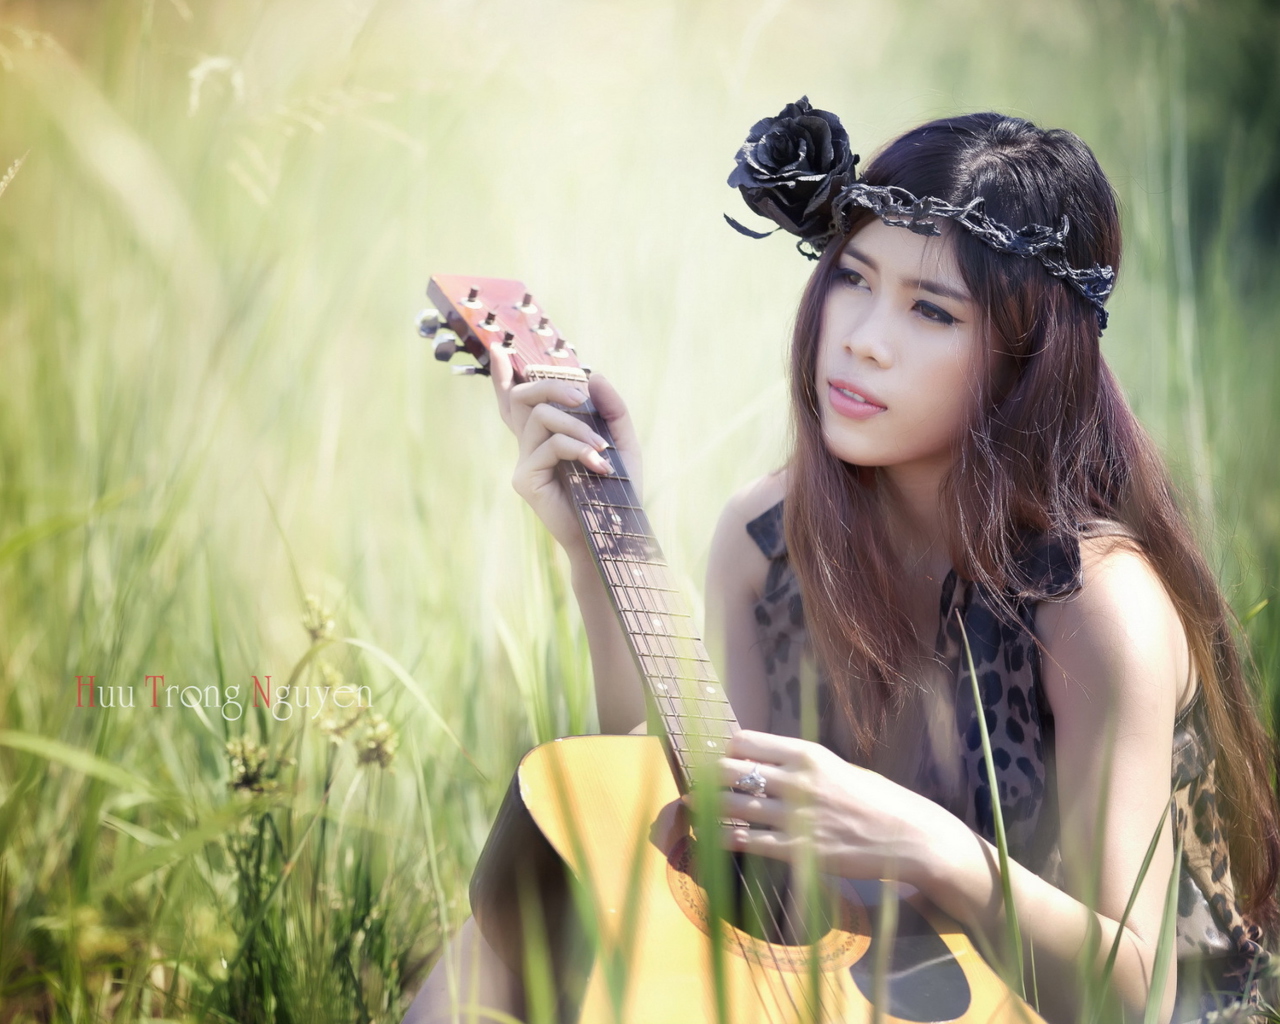 Sfondi Pretty Girl In Grass Playing Guitar 1280x1024